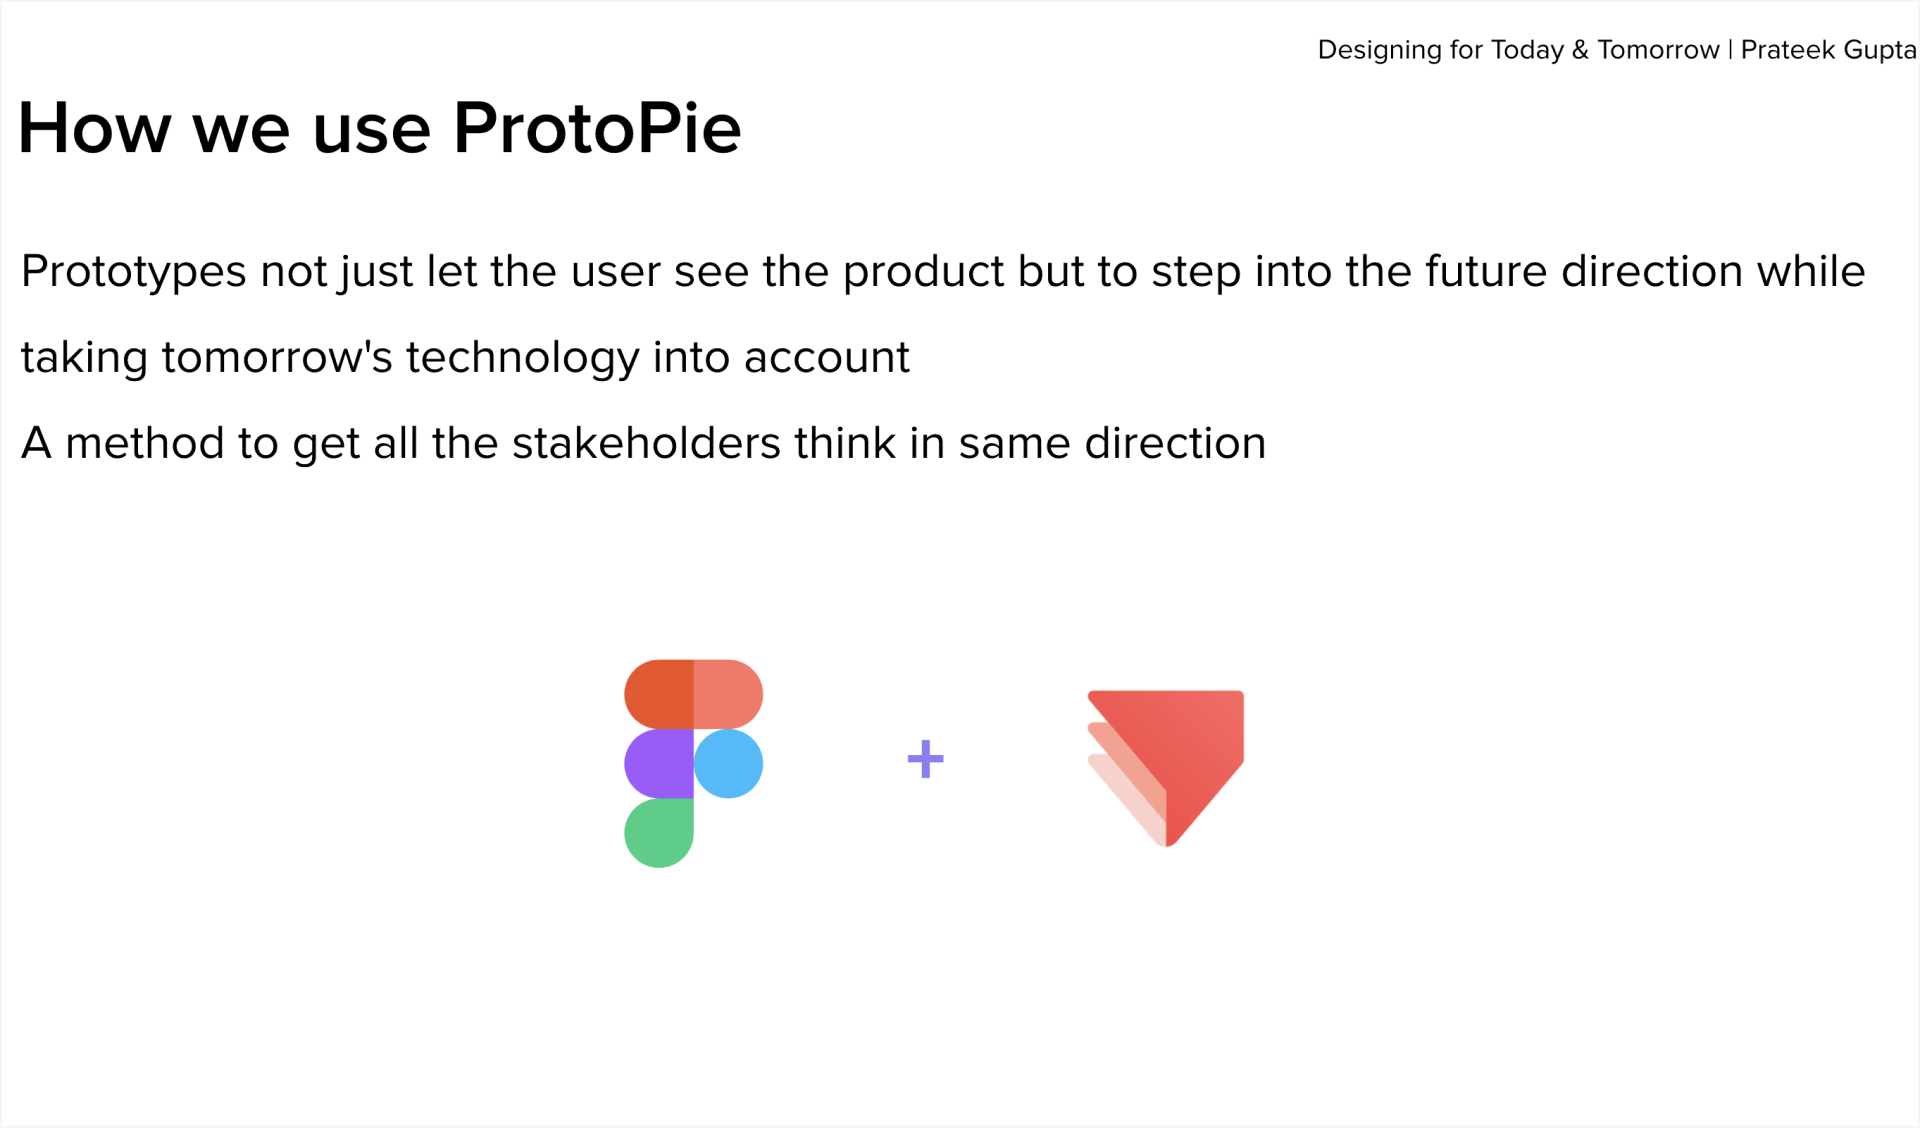 ProtoPie plays an essential role in Flipkart's design process 